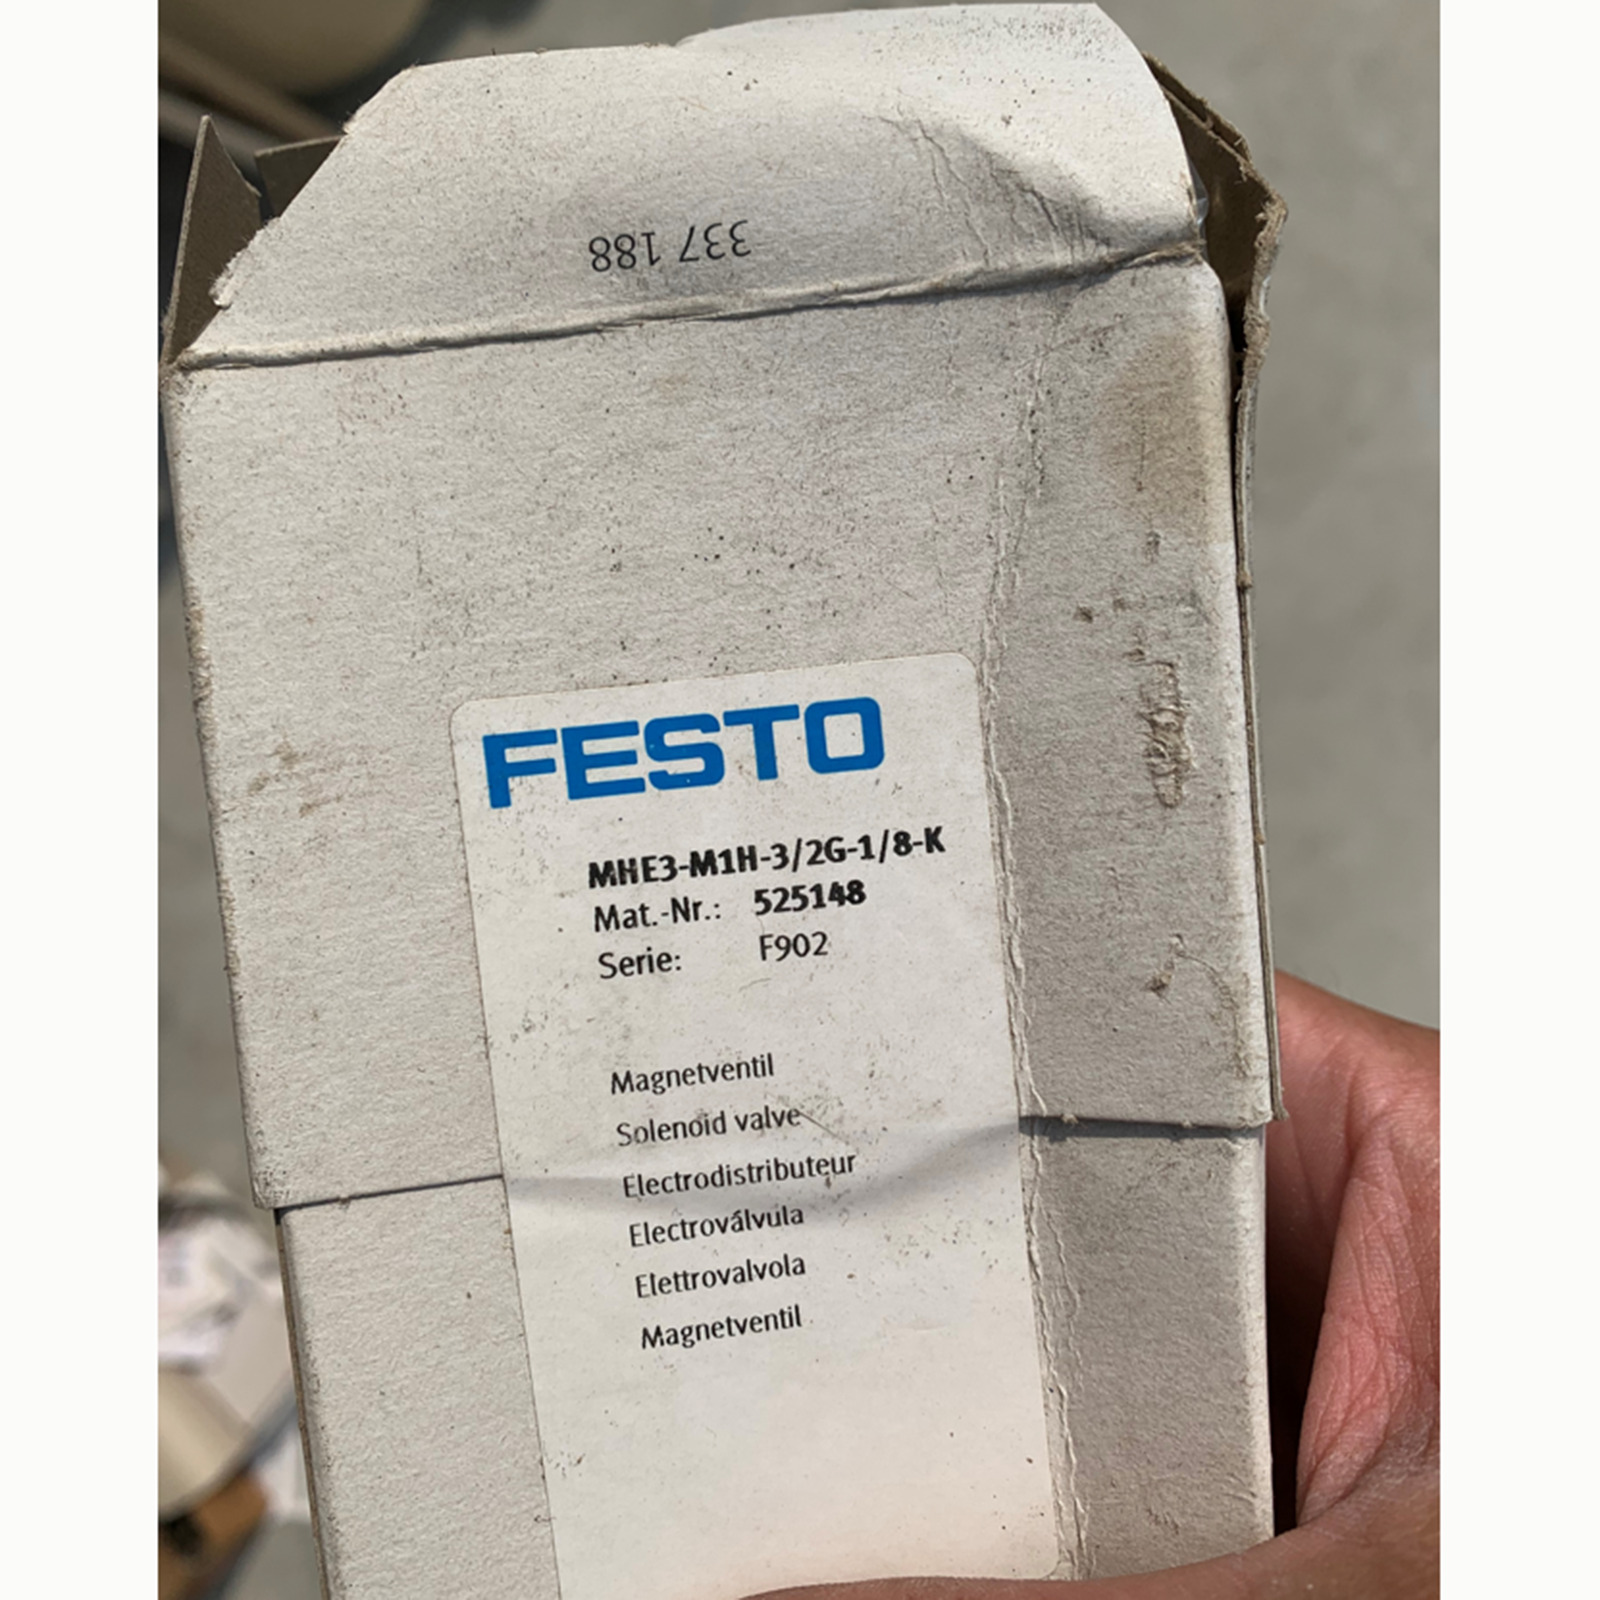 1PC new festo solenoid valve MHE3-M1H-3/2G-1/8-K 525148